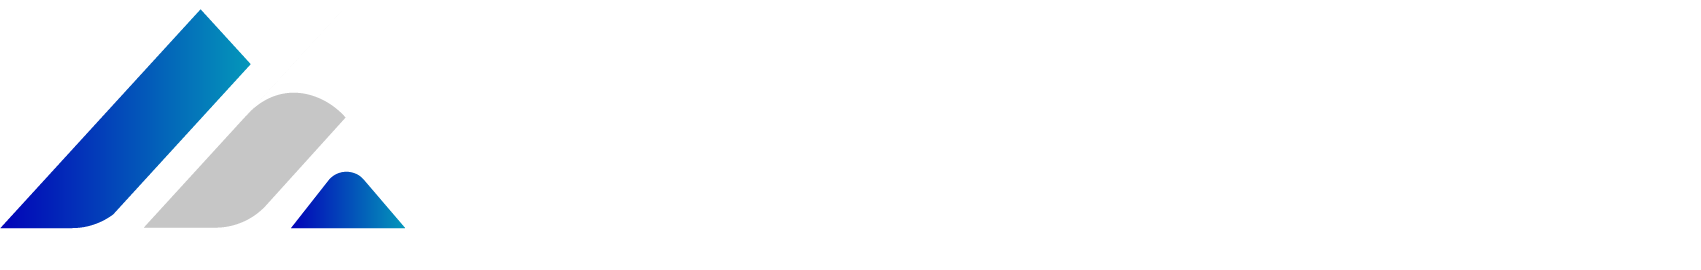 Aimiv Construcción Logo